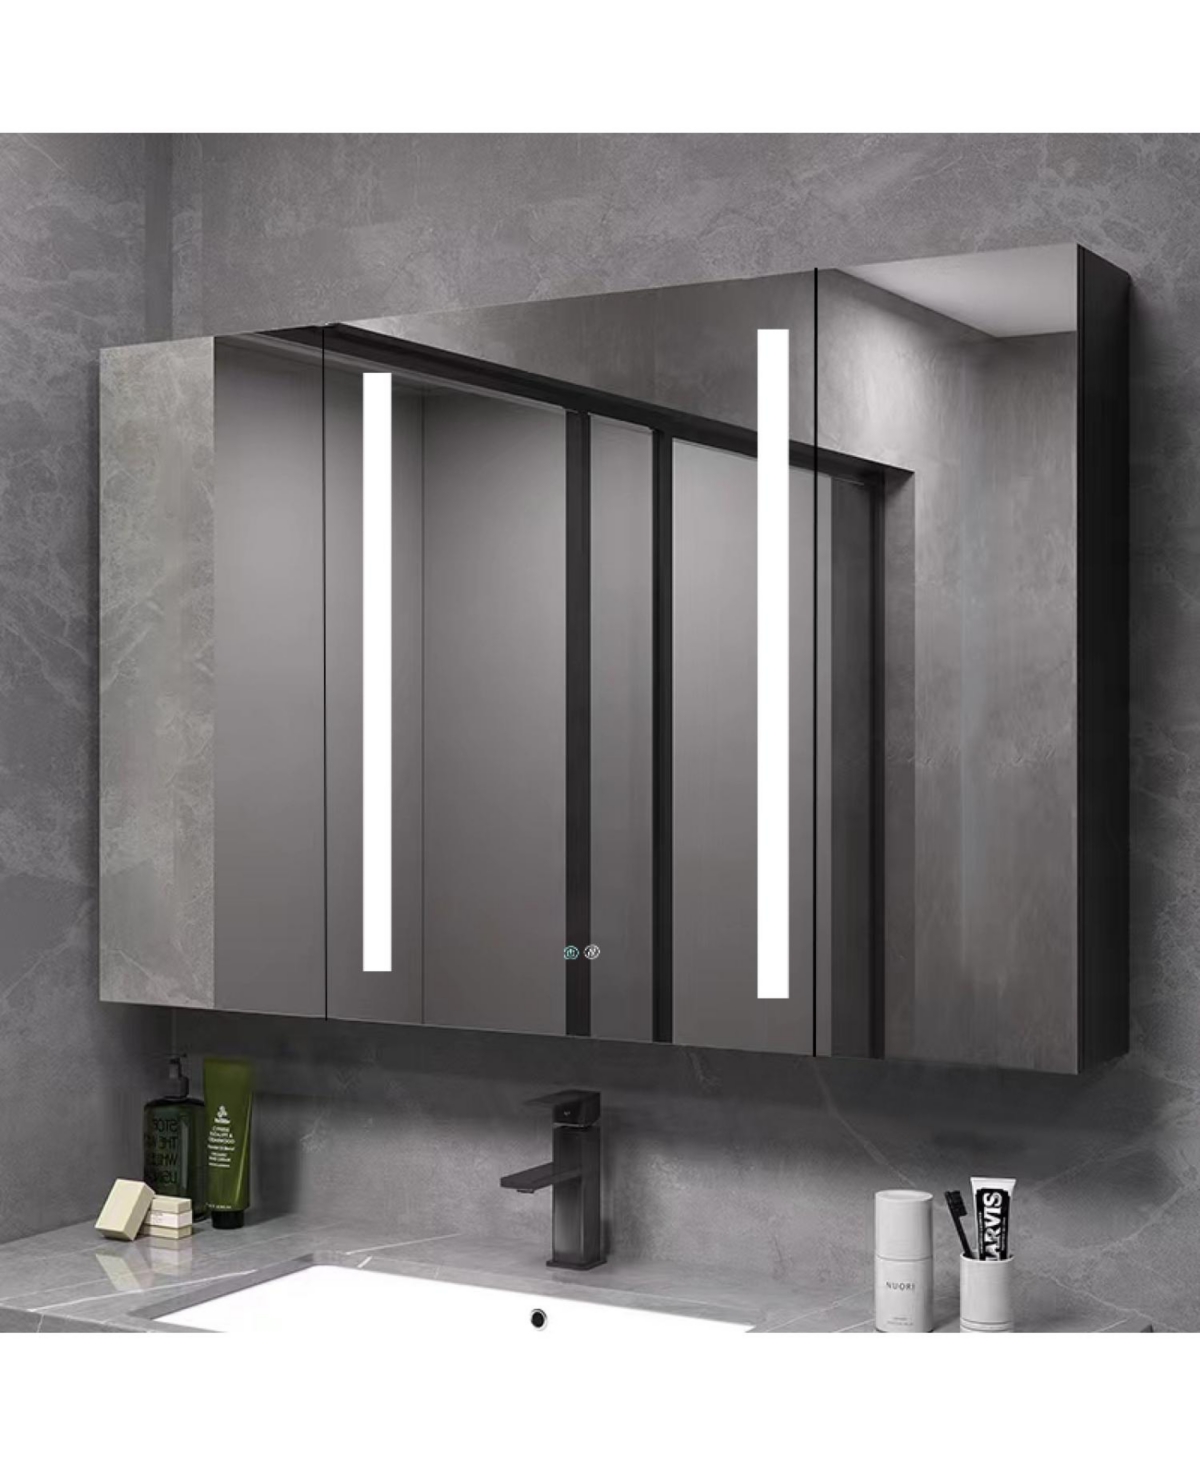 40x30 Inch Led Bathroom Medicine Cabinet Surface Mount Double Door Lighted Medicine Cabinet - Black